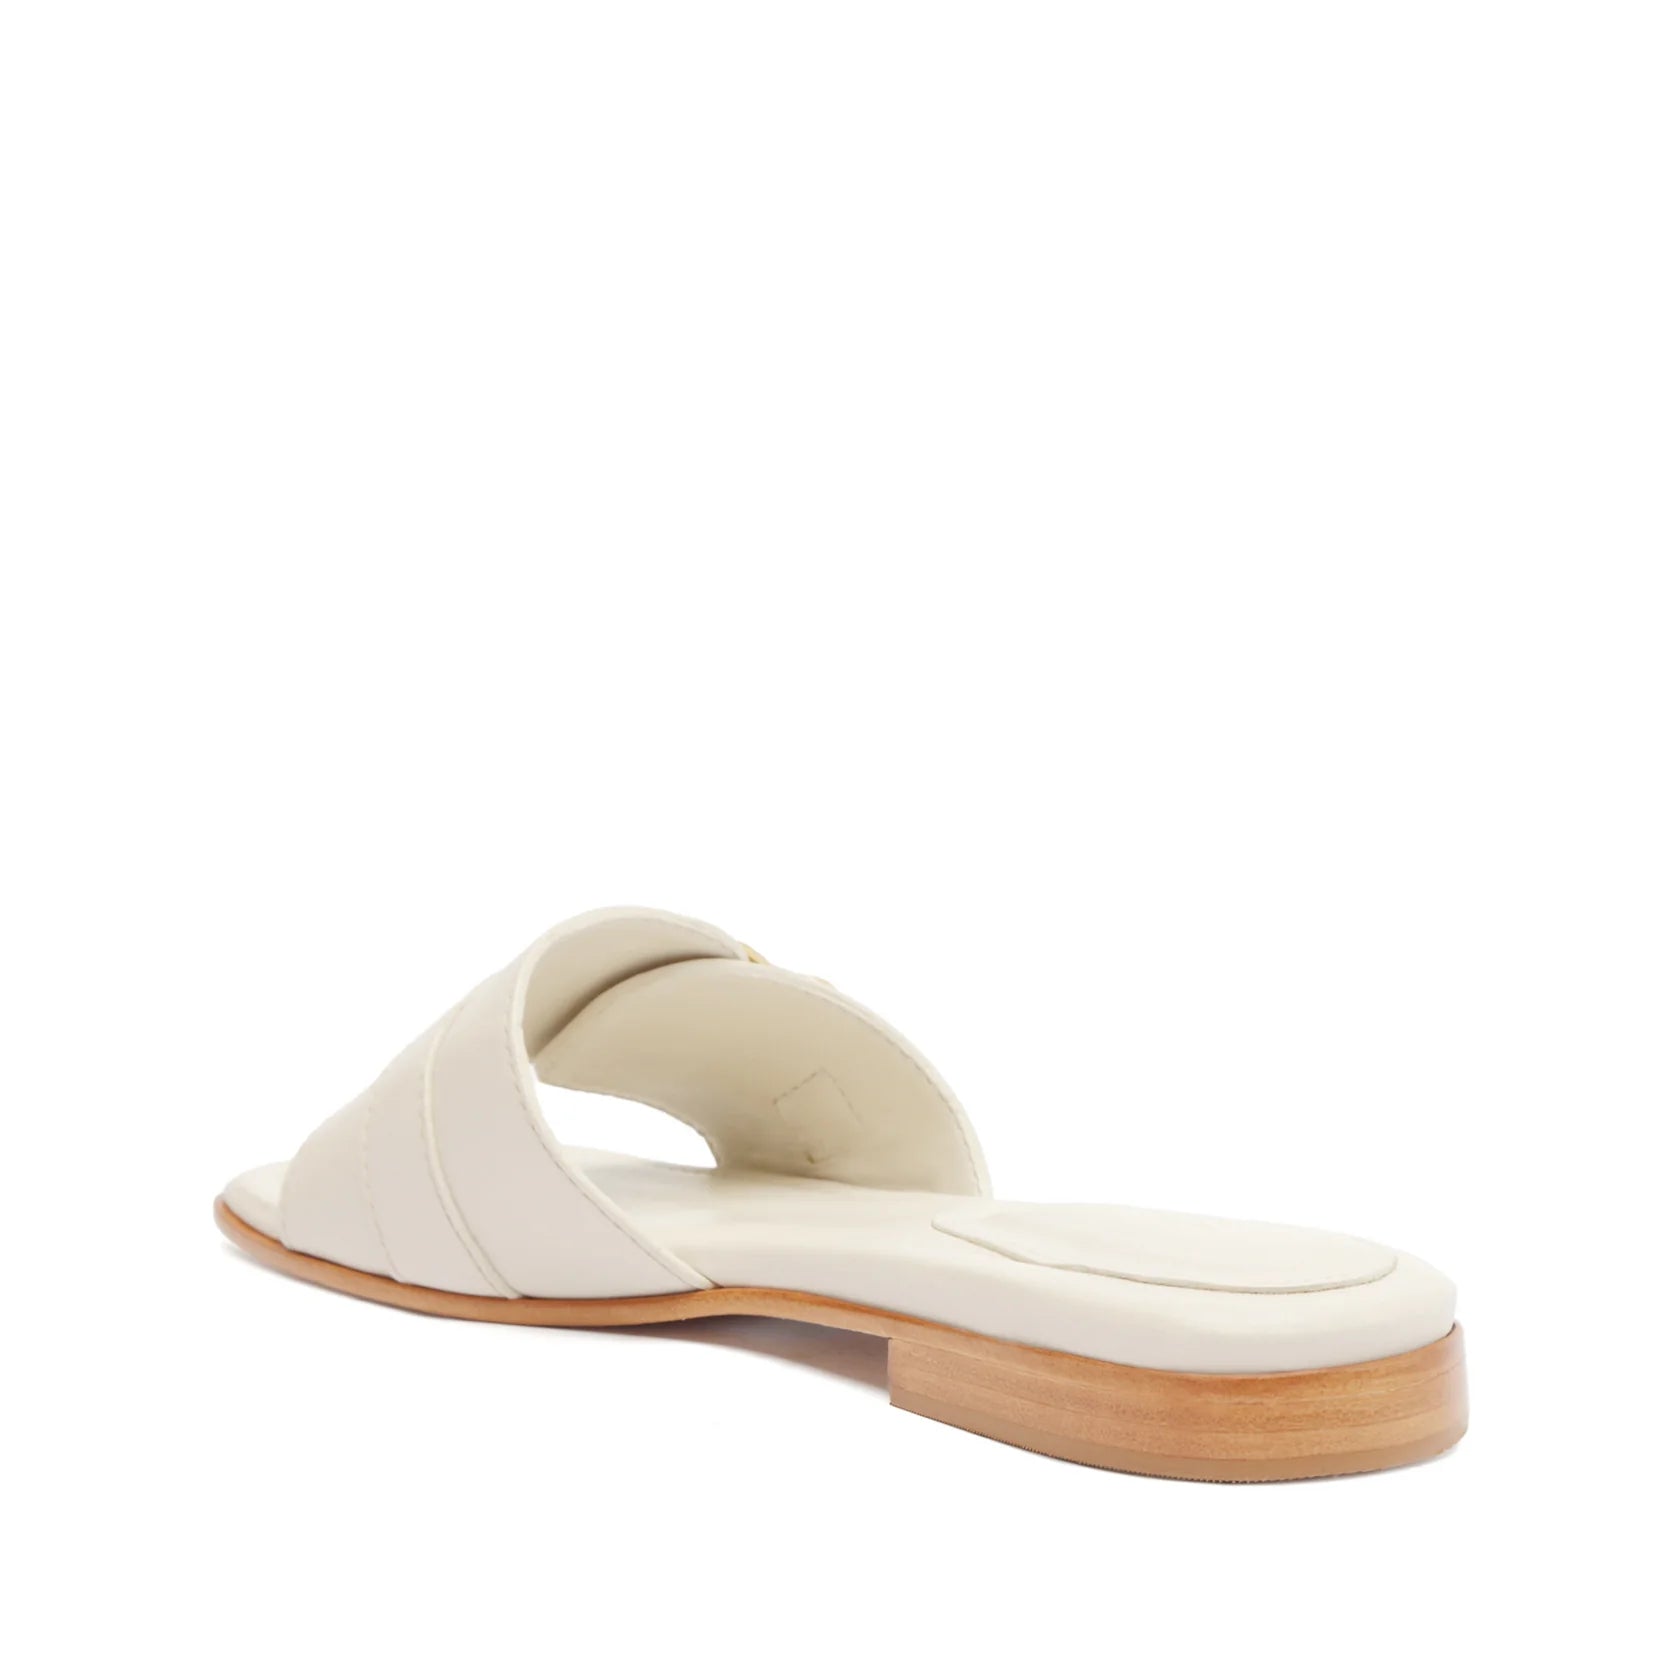 Schutz Wavy Flat Sandal in Pearl - Estilo Boutique